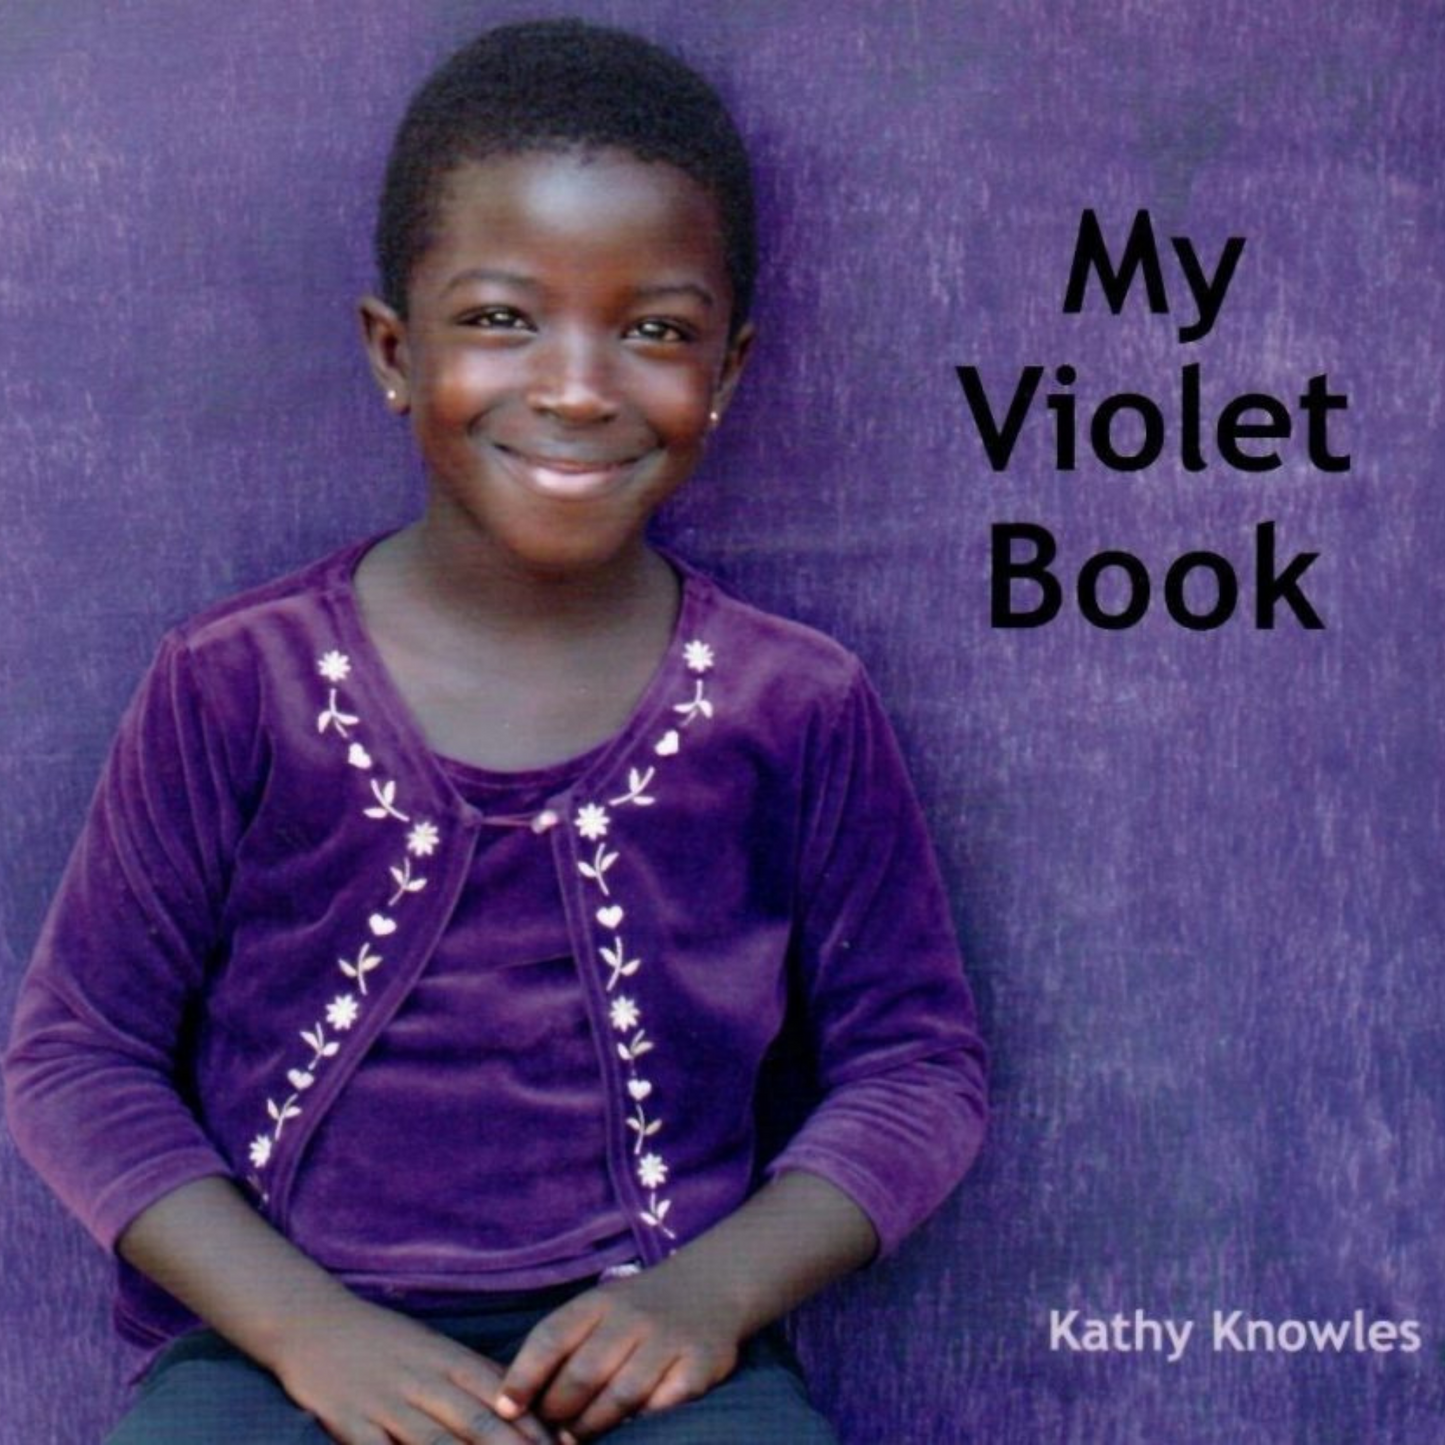 My Violet Book